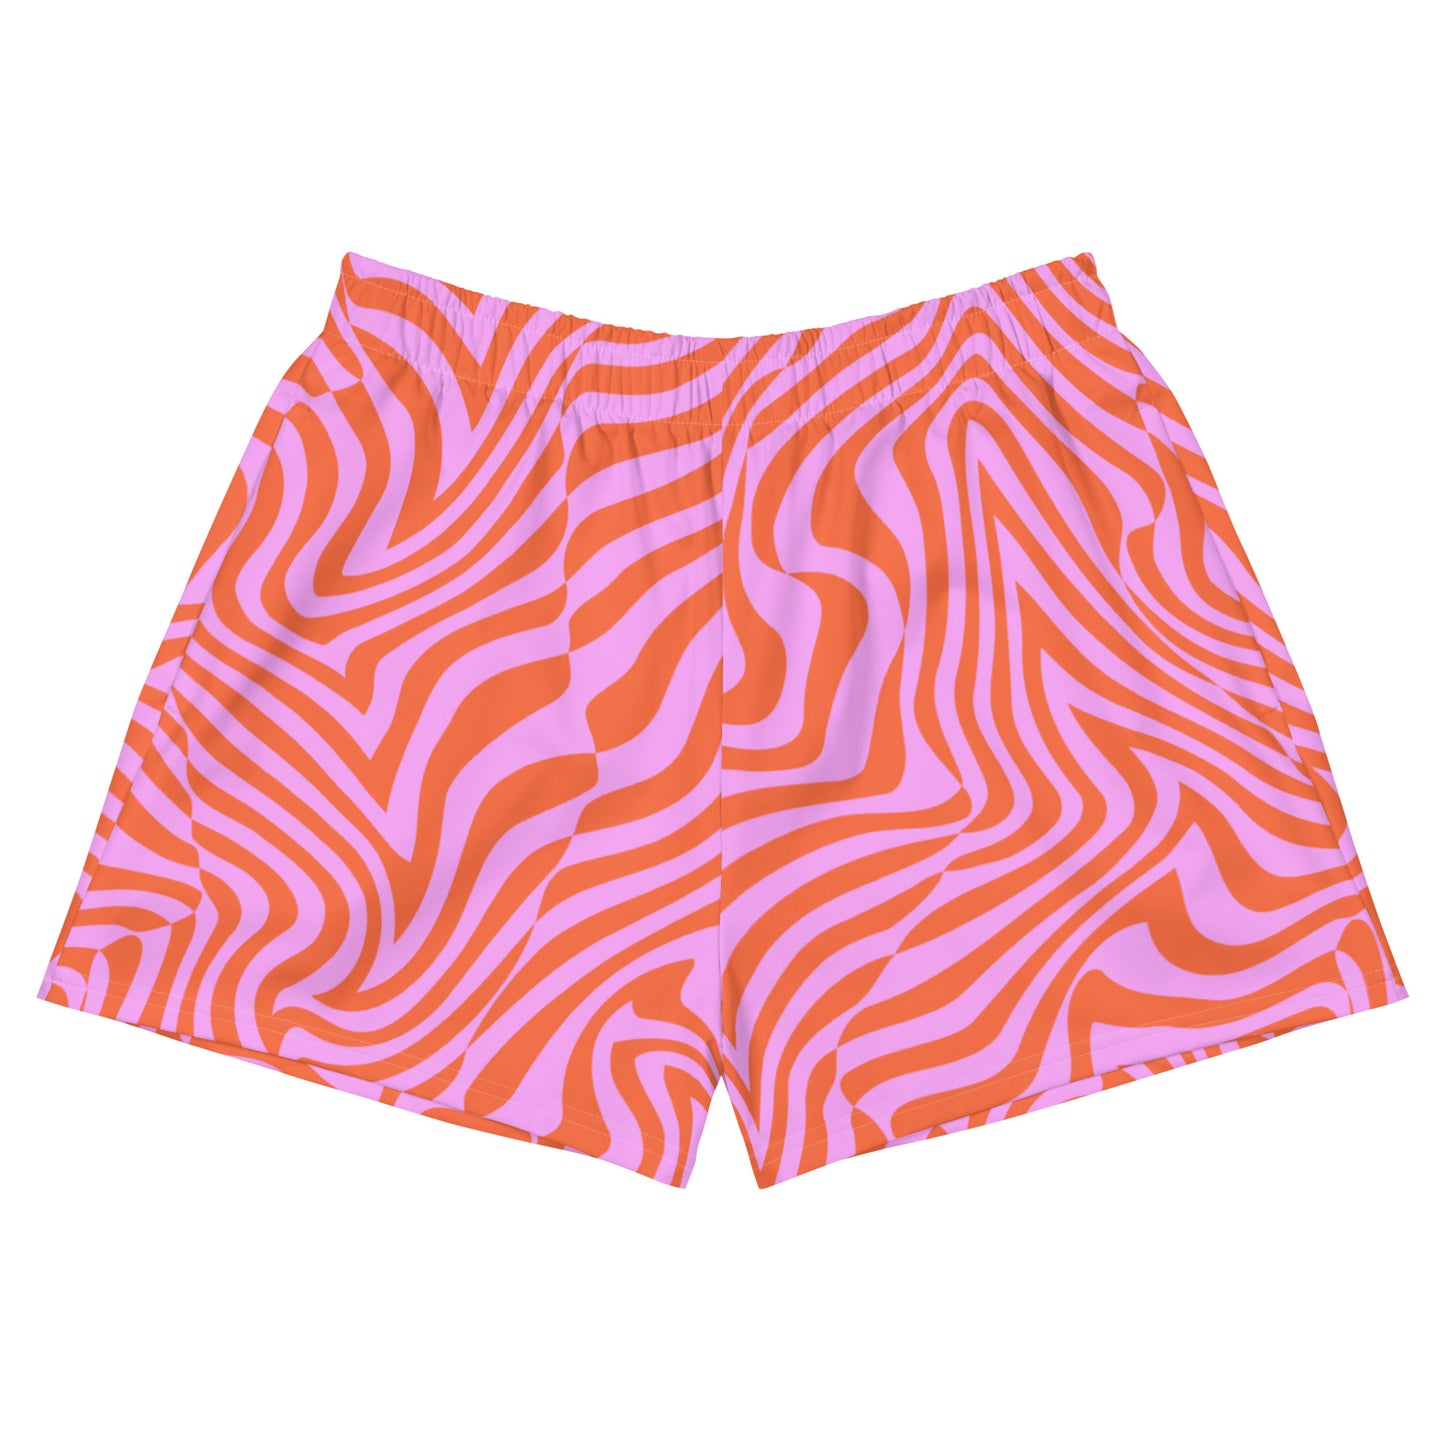 Sloane Swirl Women's Shorts